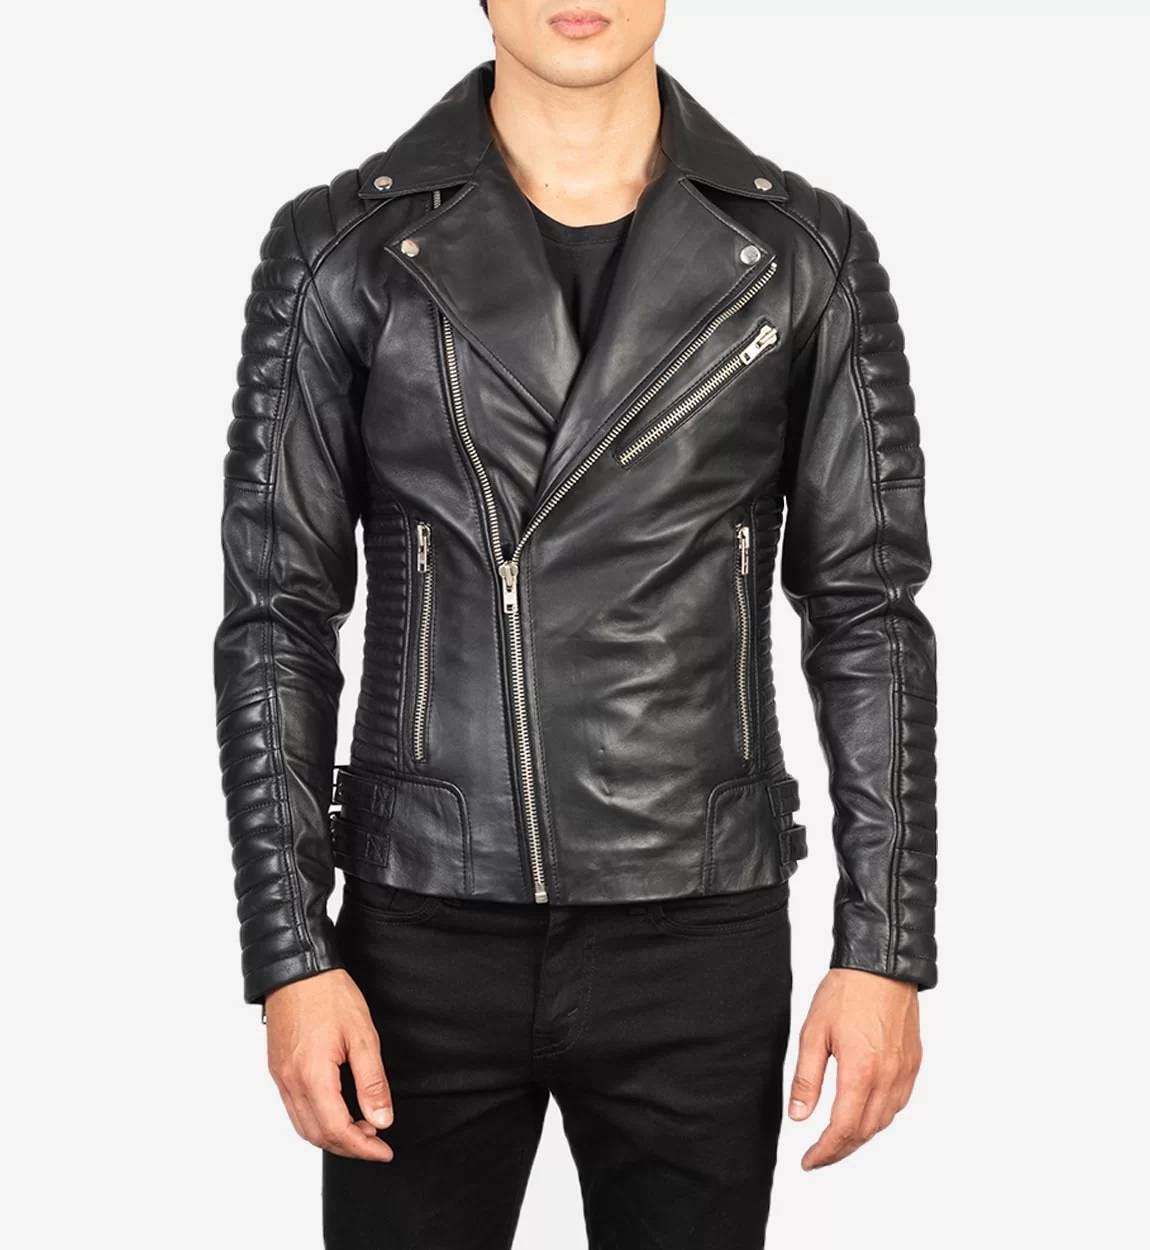 Men leather jacket - Markowoolenleather - Medium